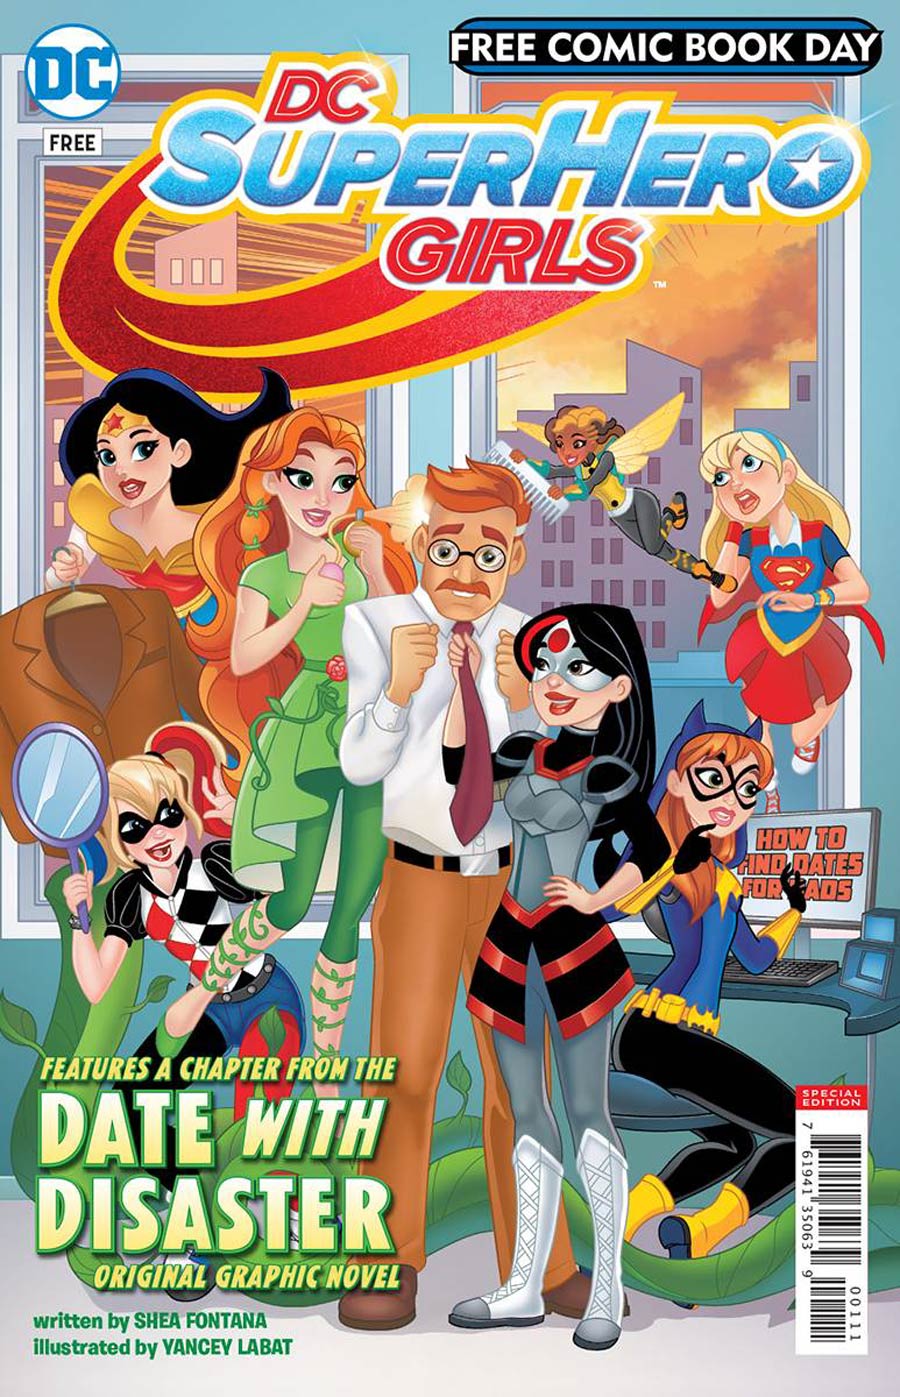 DC Super Hero Girls #1 FCBD 2018